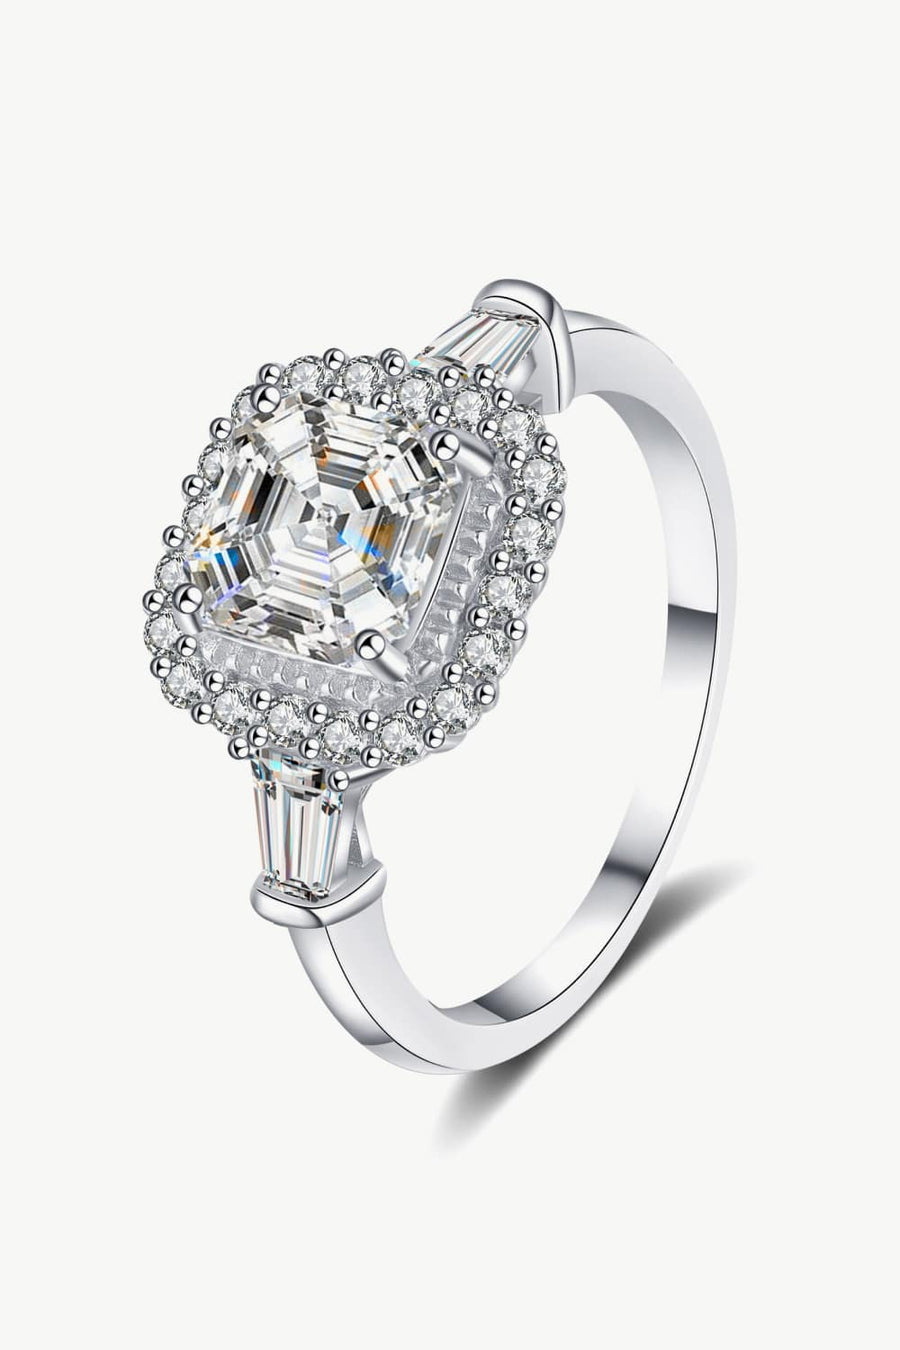 Best Diamond Ring Jewelry Gifts for Women | 2 Carat Asscher Diamond Ring - So Much Shine | MASON New York